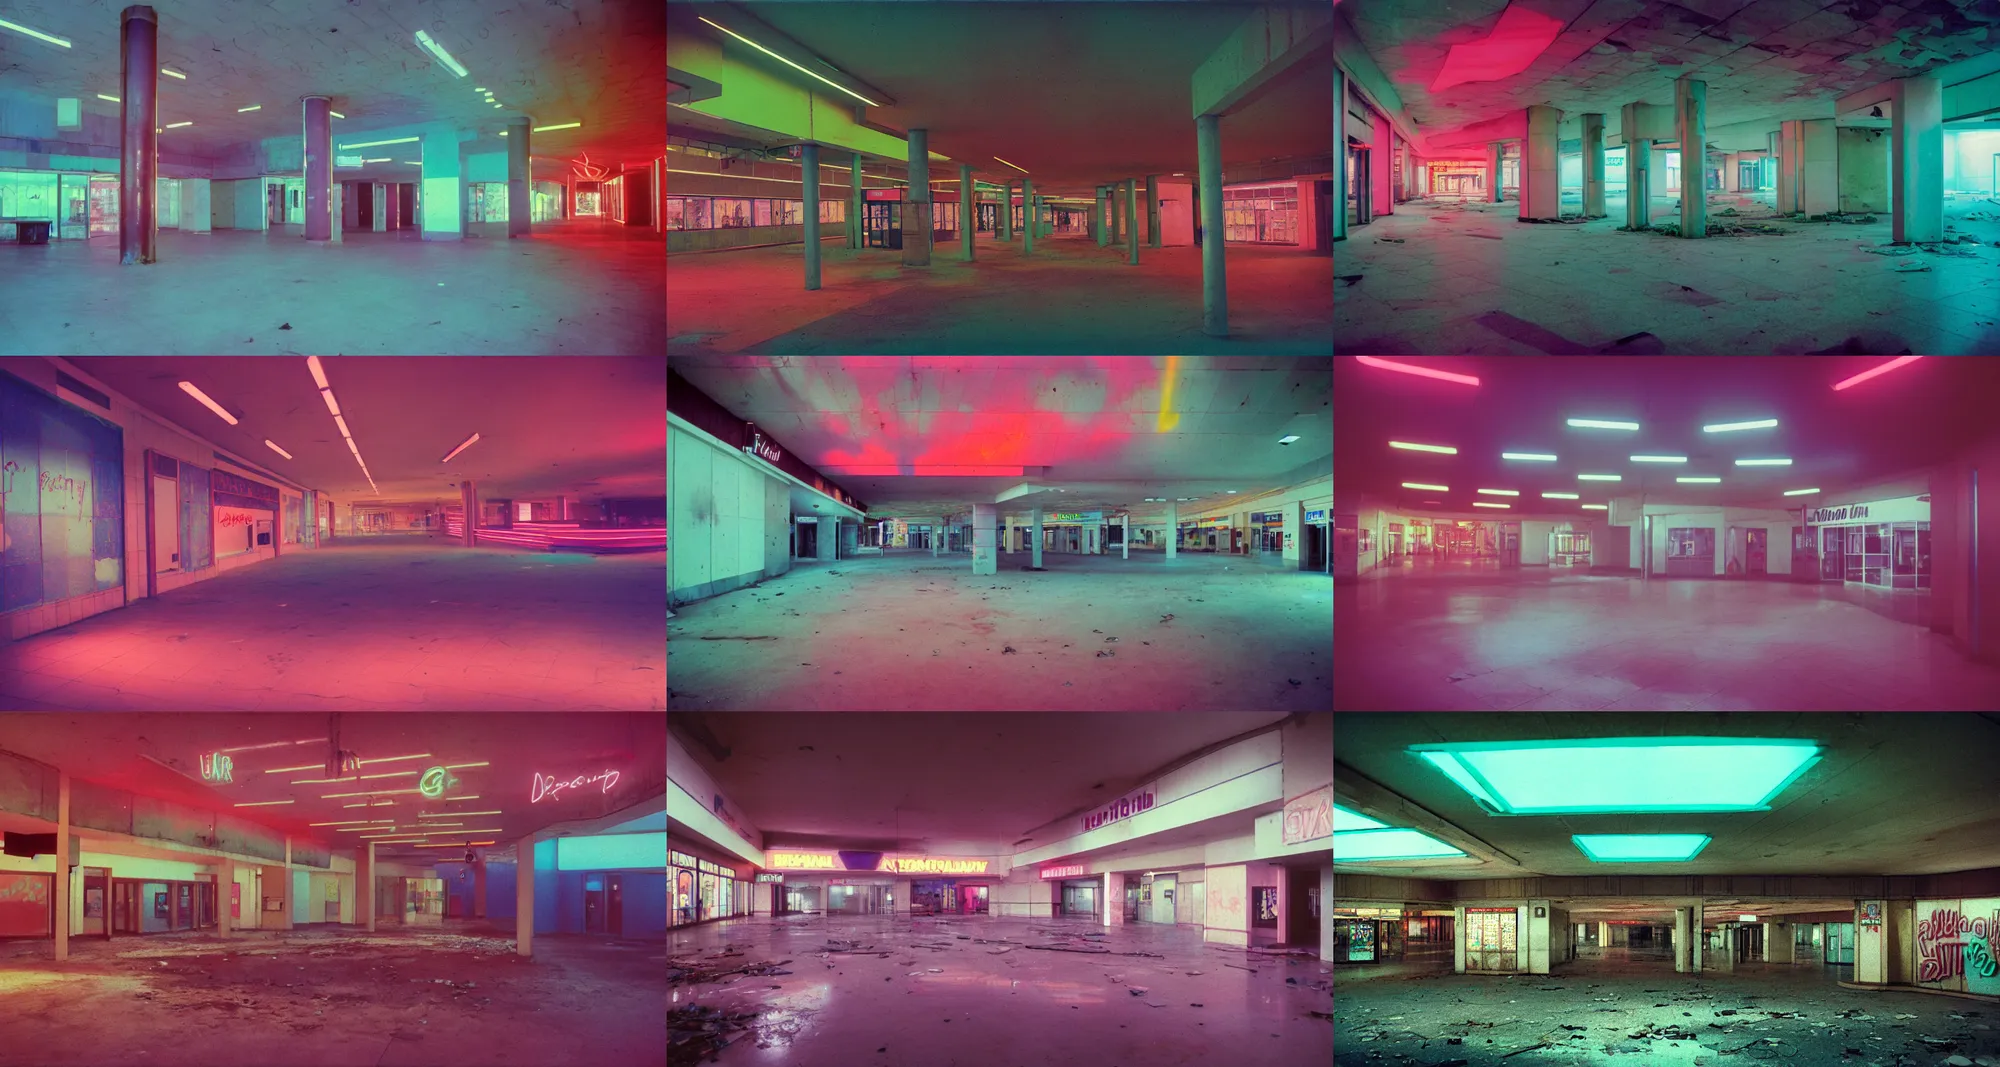 Prompt: an abandoned mall in 1985, neon lights, fountain, dirty, ektachrome photograph, volumetric lighting, f8 aperture, cinematic Eastman 5384 film